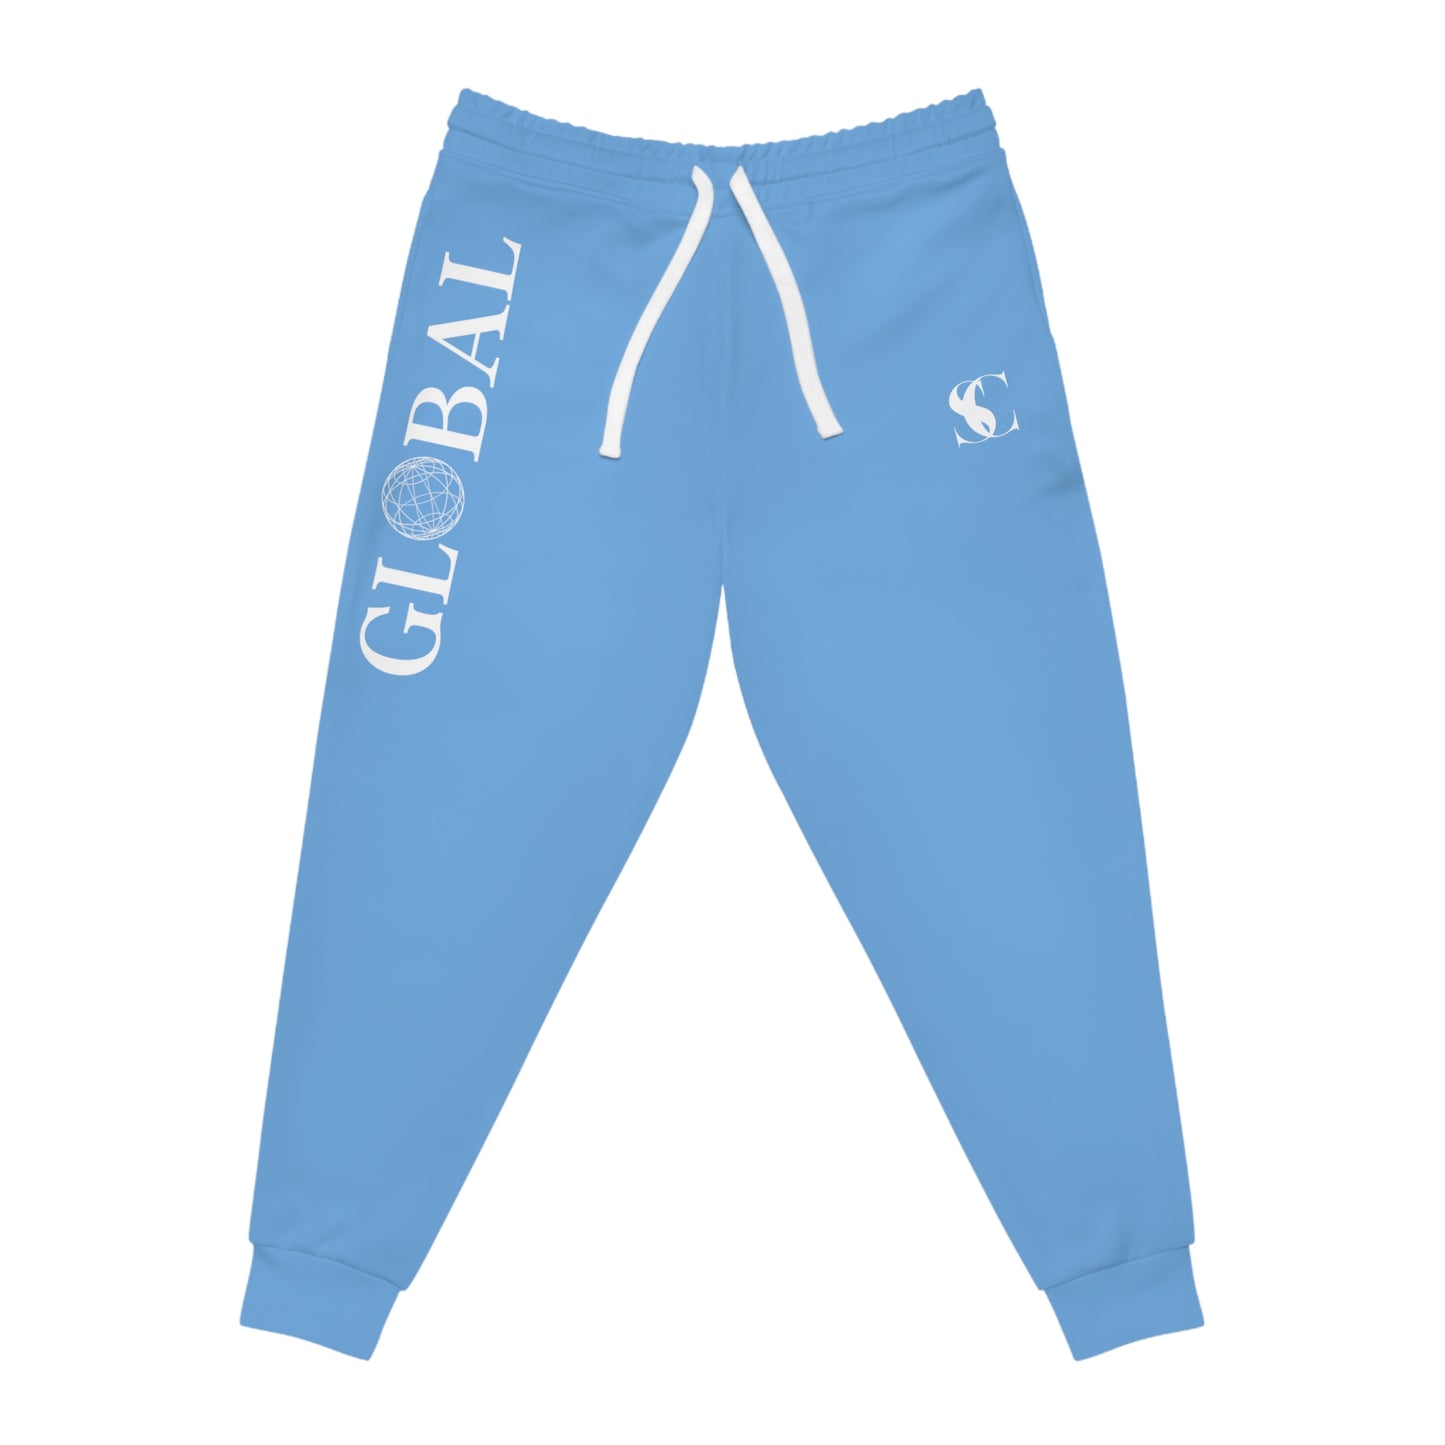 Men's Global sweatpants - Light blue